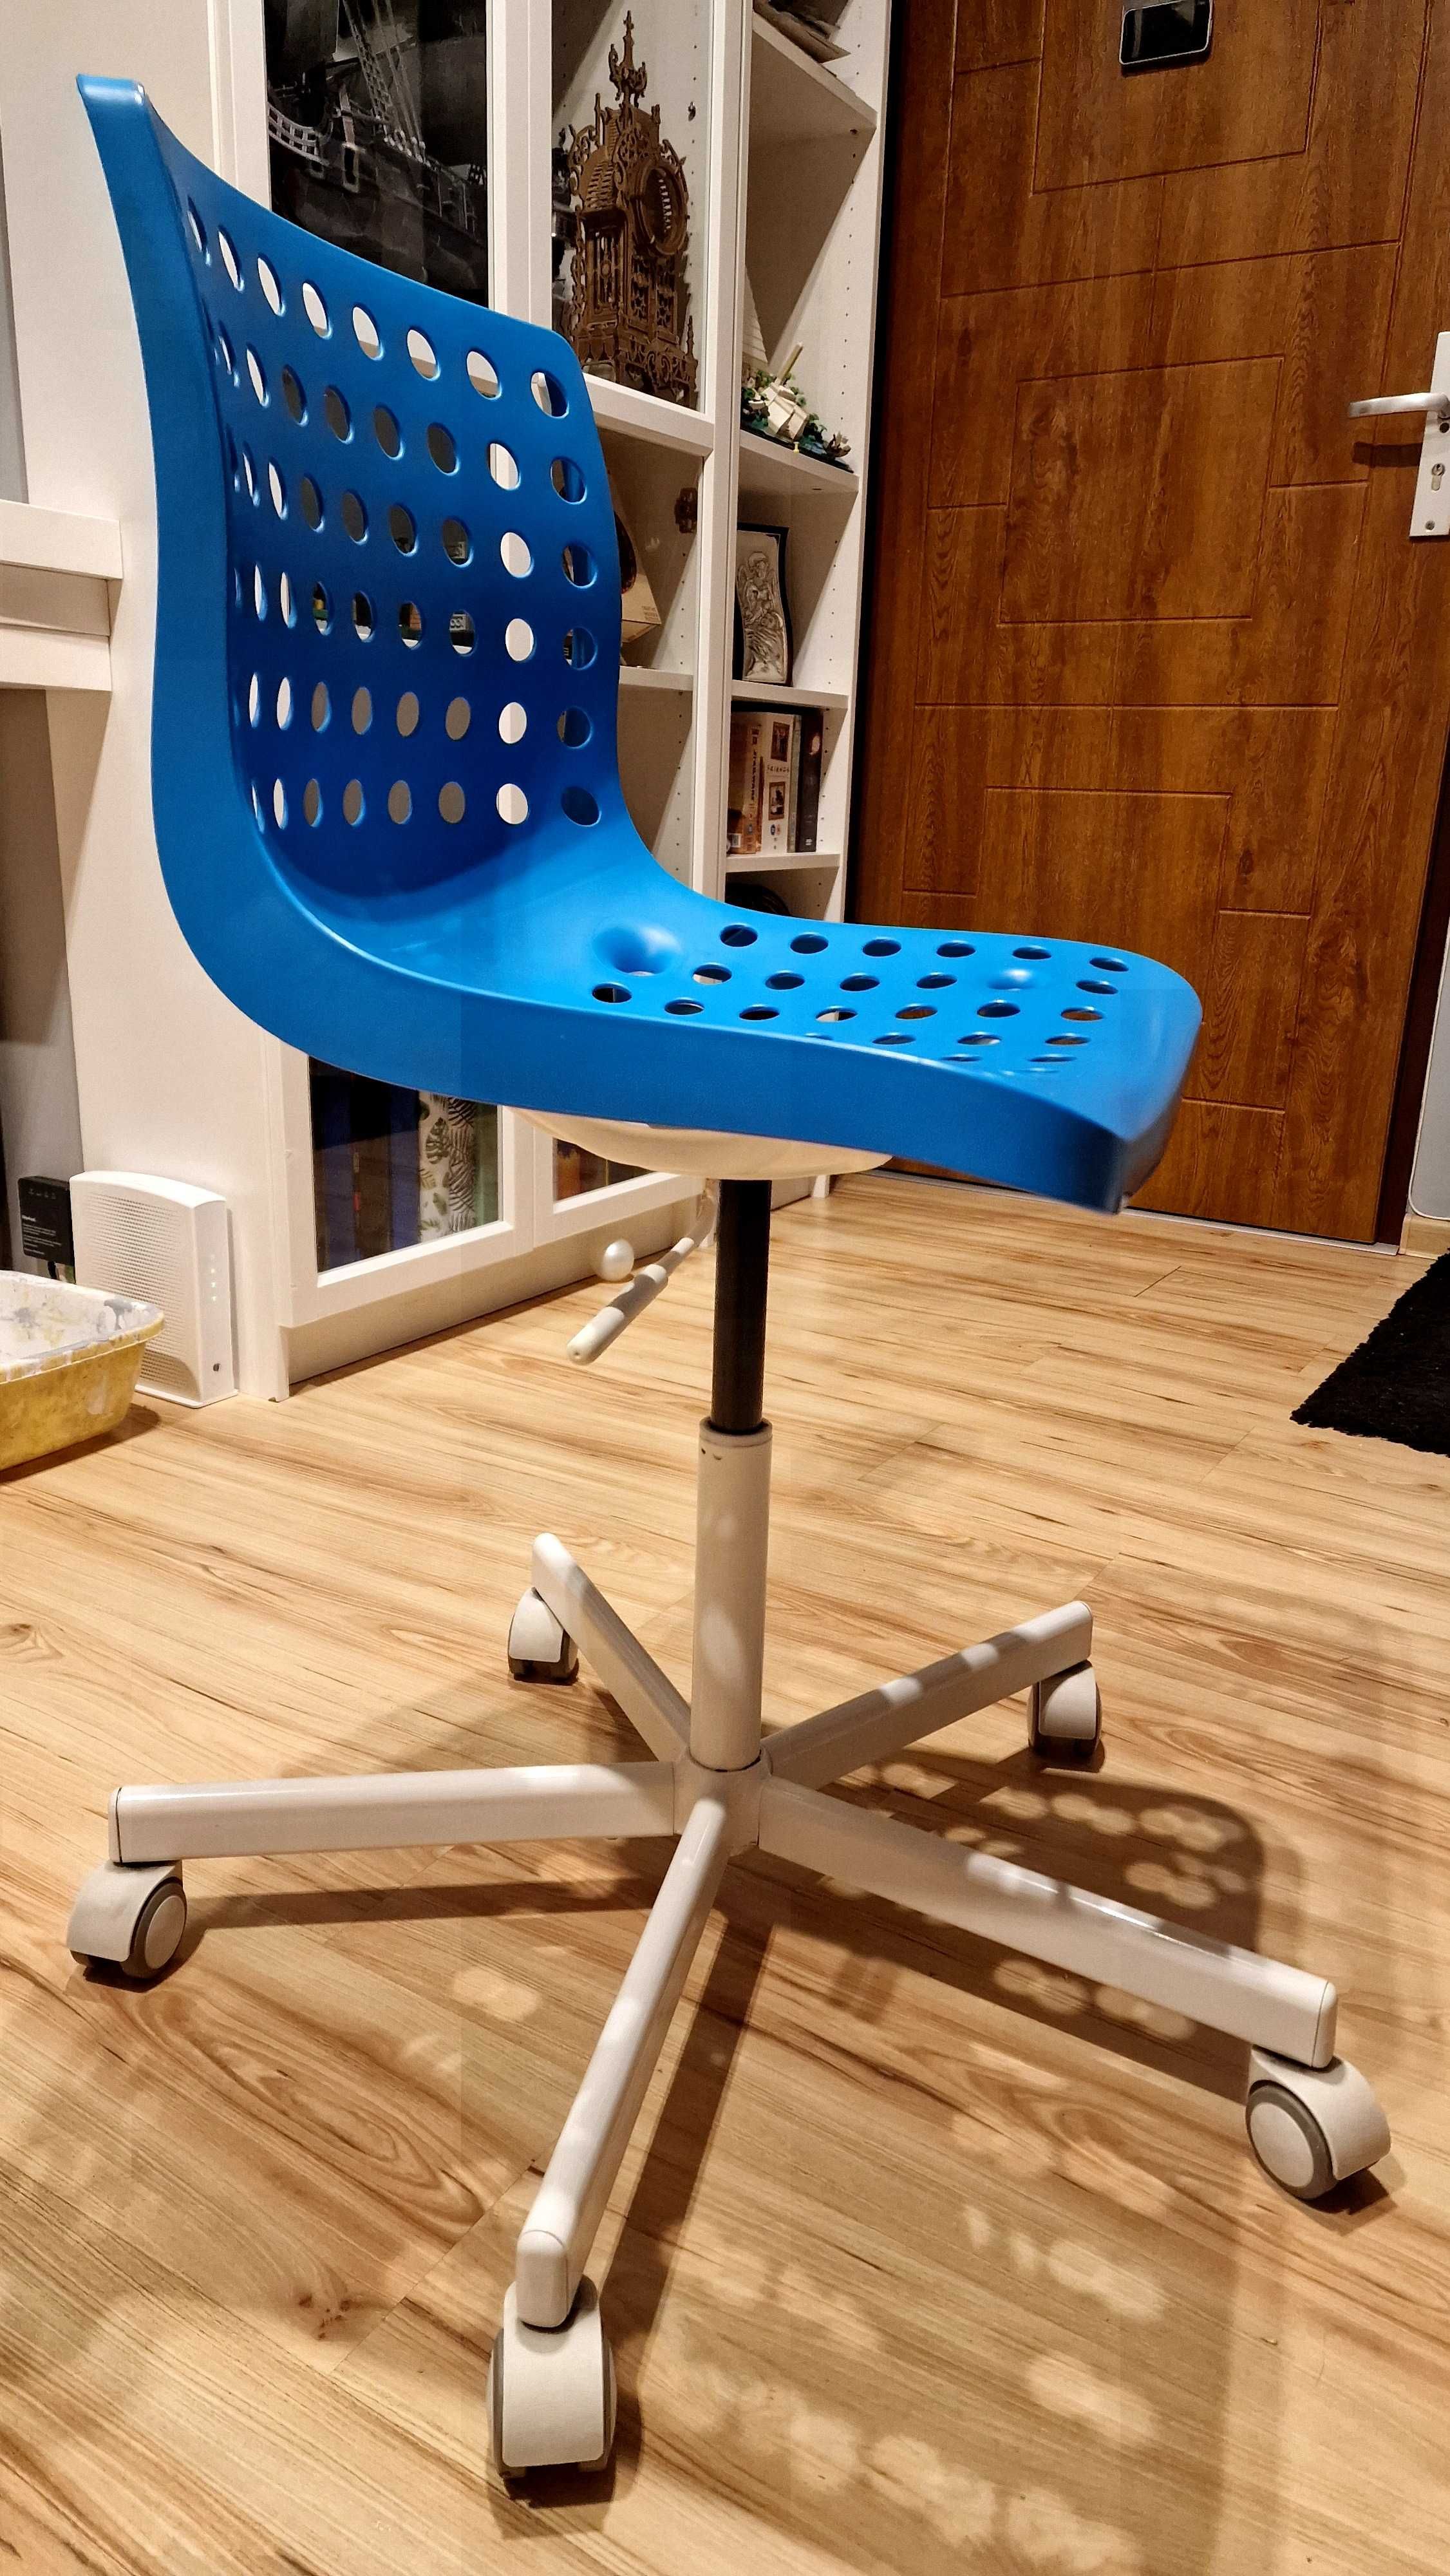 Krzeslo obrotowe Ikea